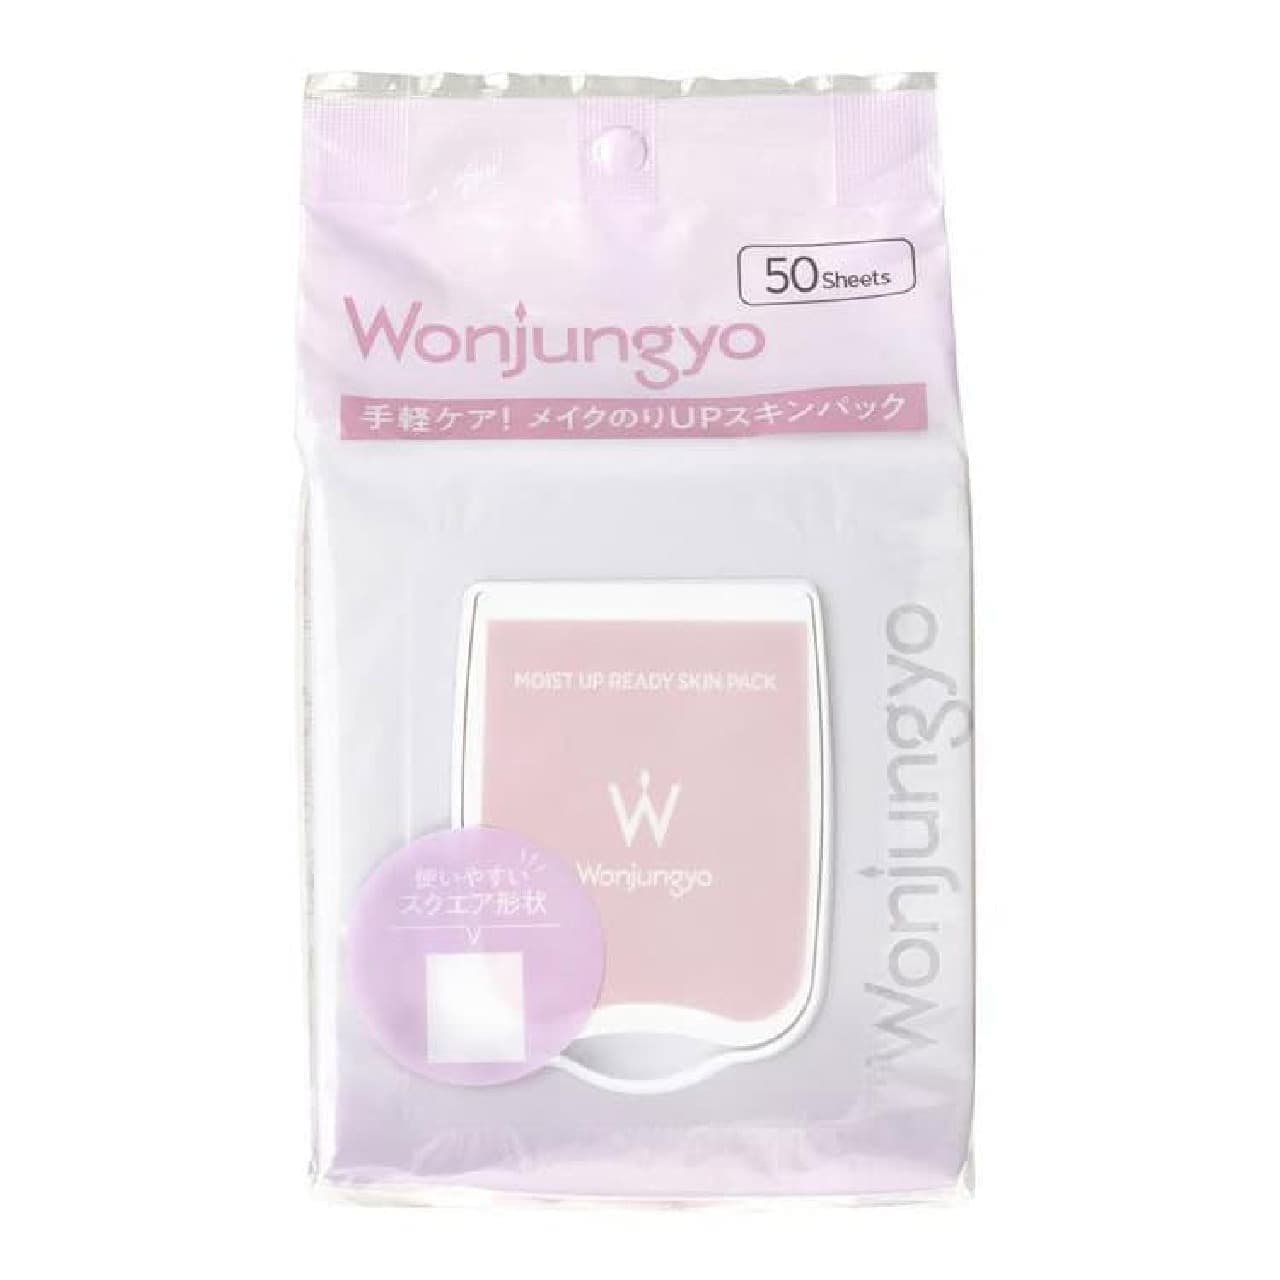 Wonjungyo Moist Up Lady Skin Pack 50 pieces